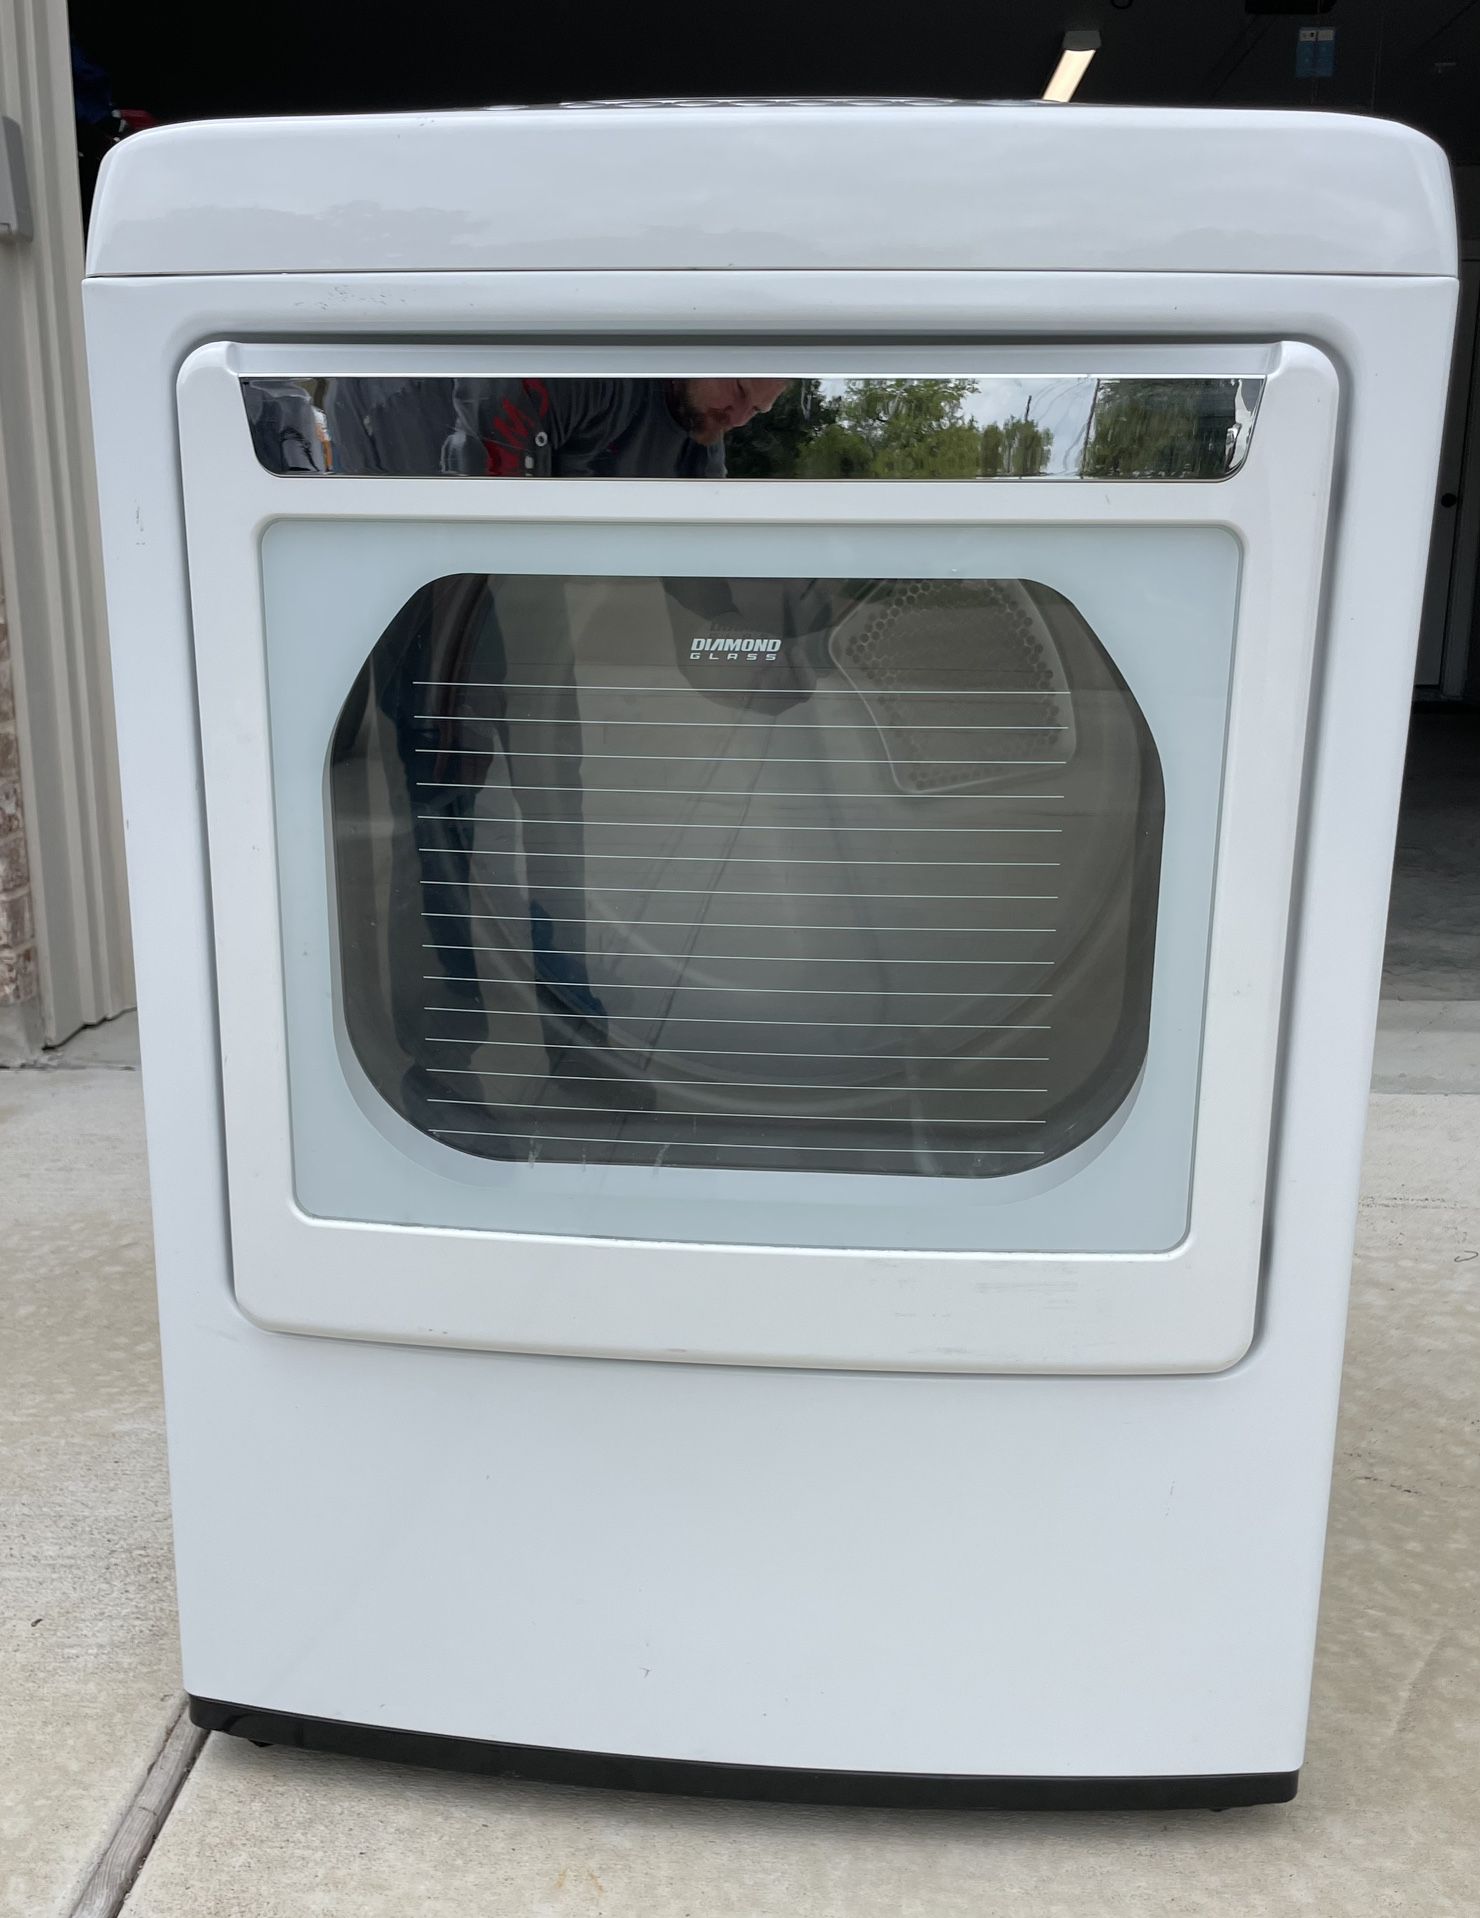 LG Dryer 7.3 cu. ft.